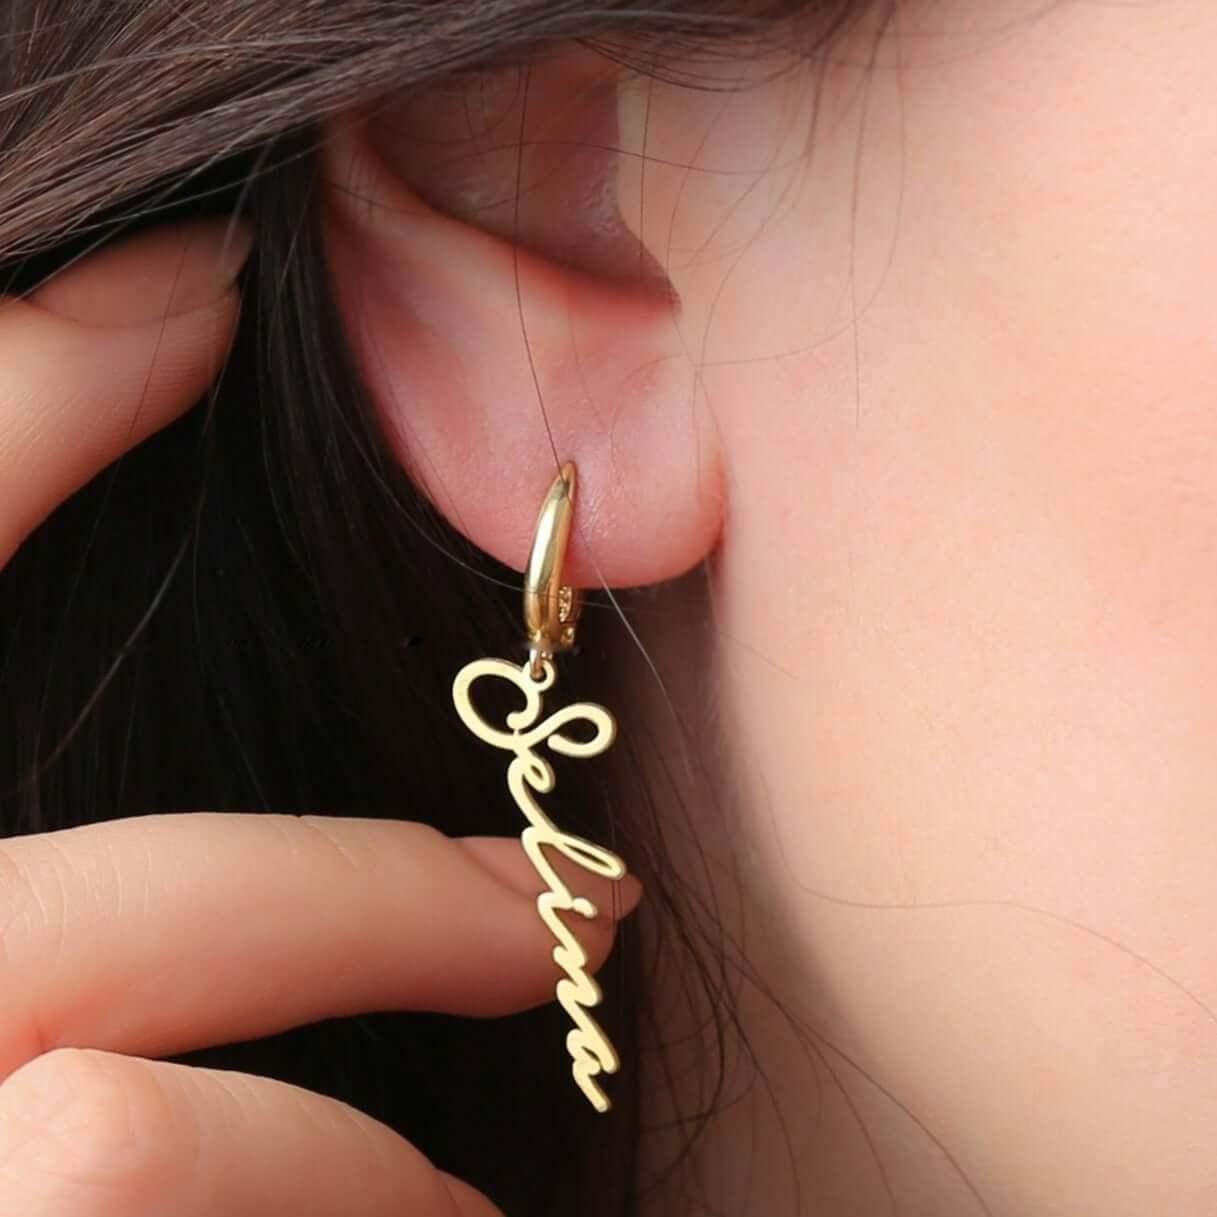 Signature Name Earring-Pendantify-Earrings,Name Earrings,Personalization